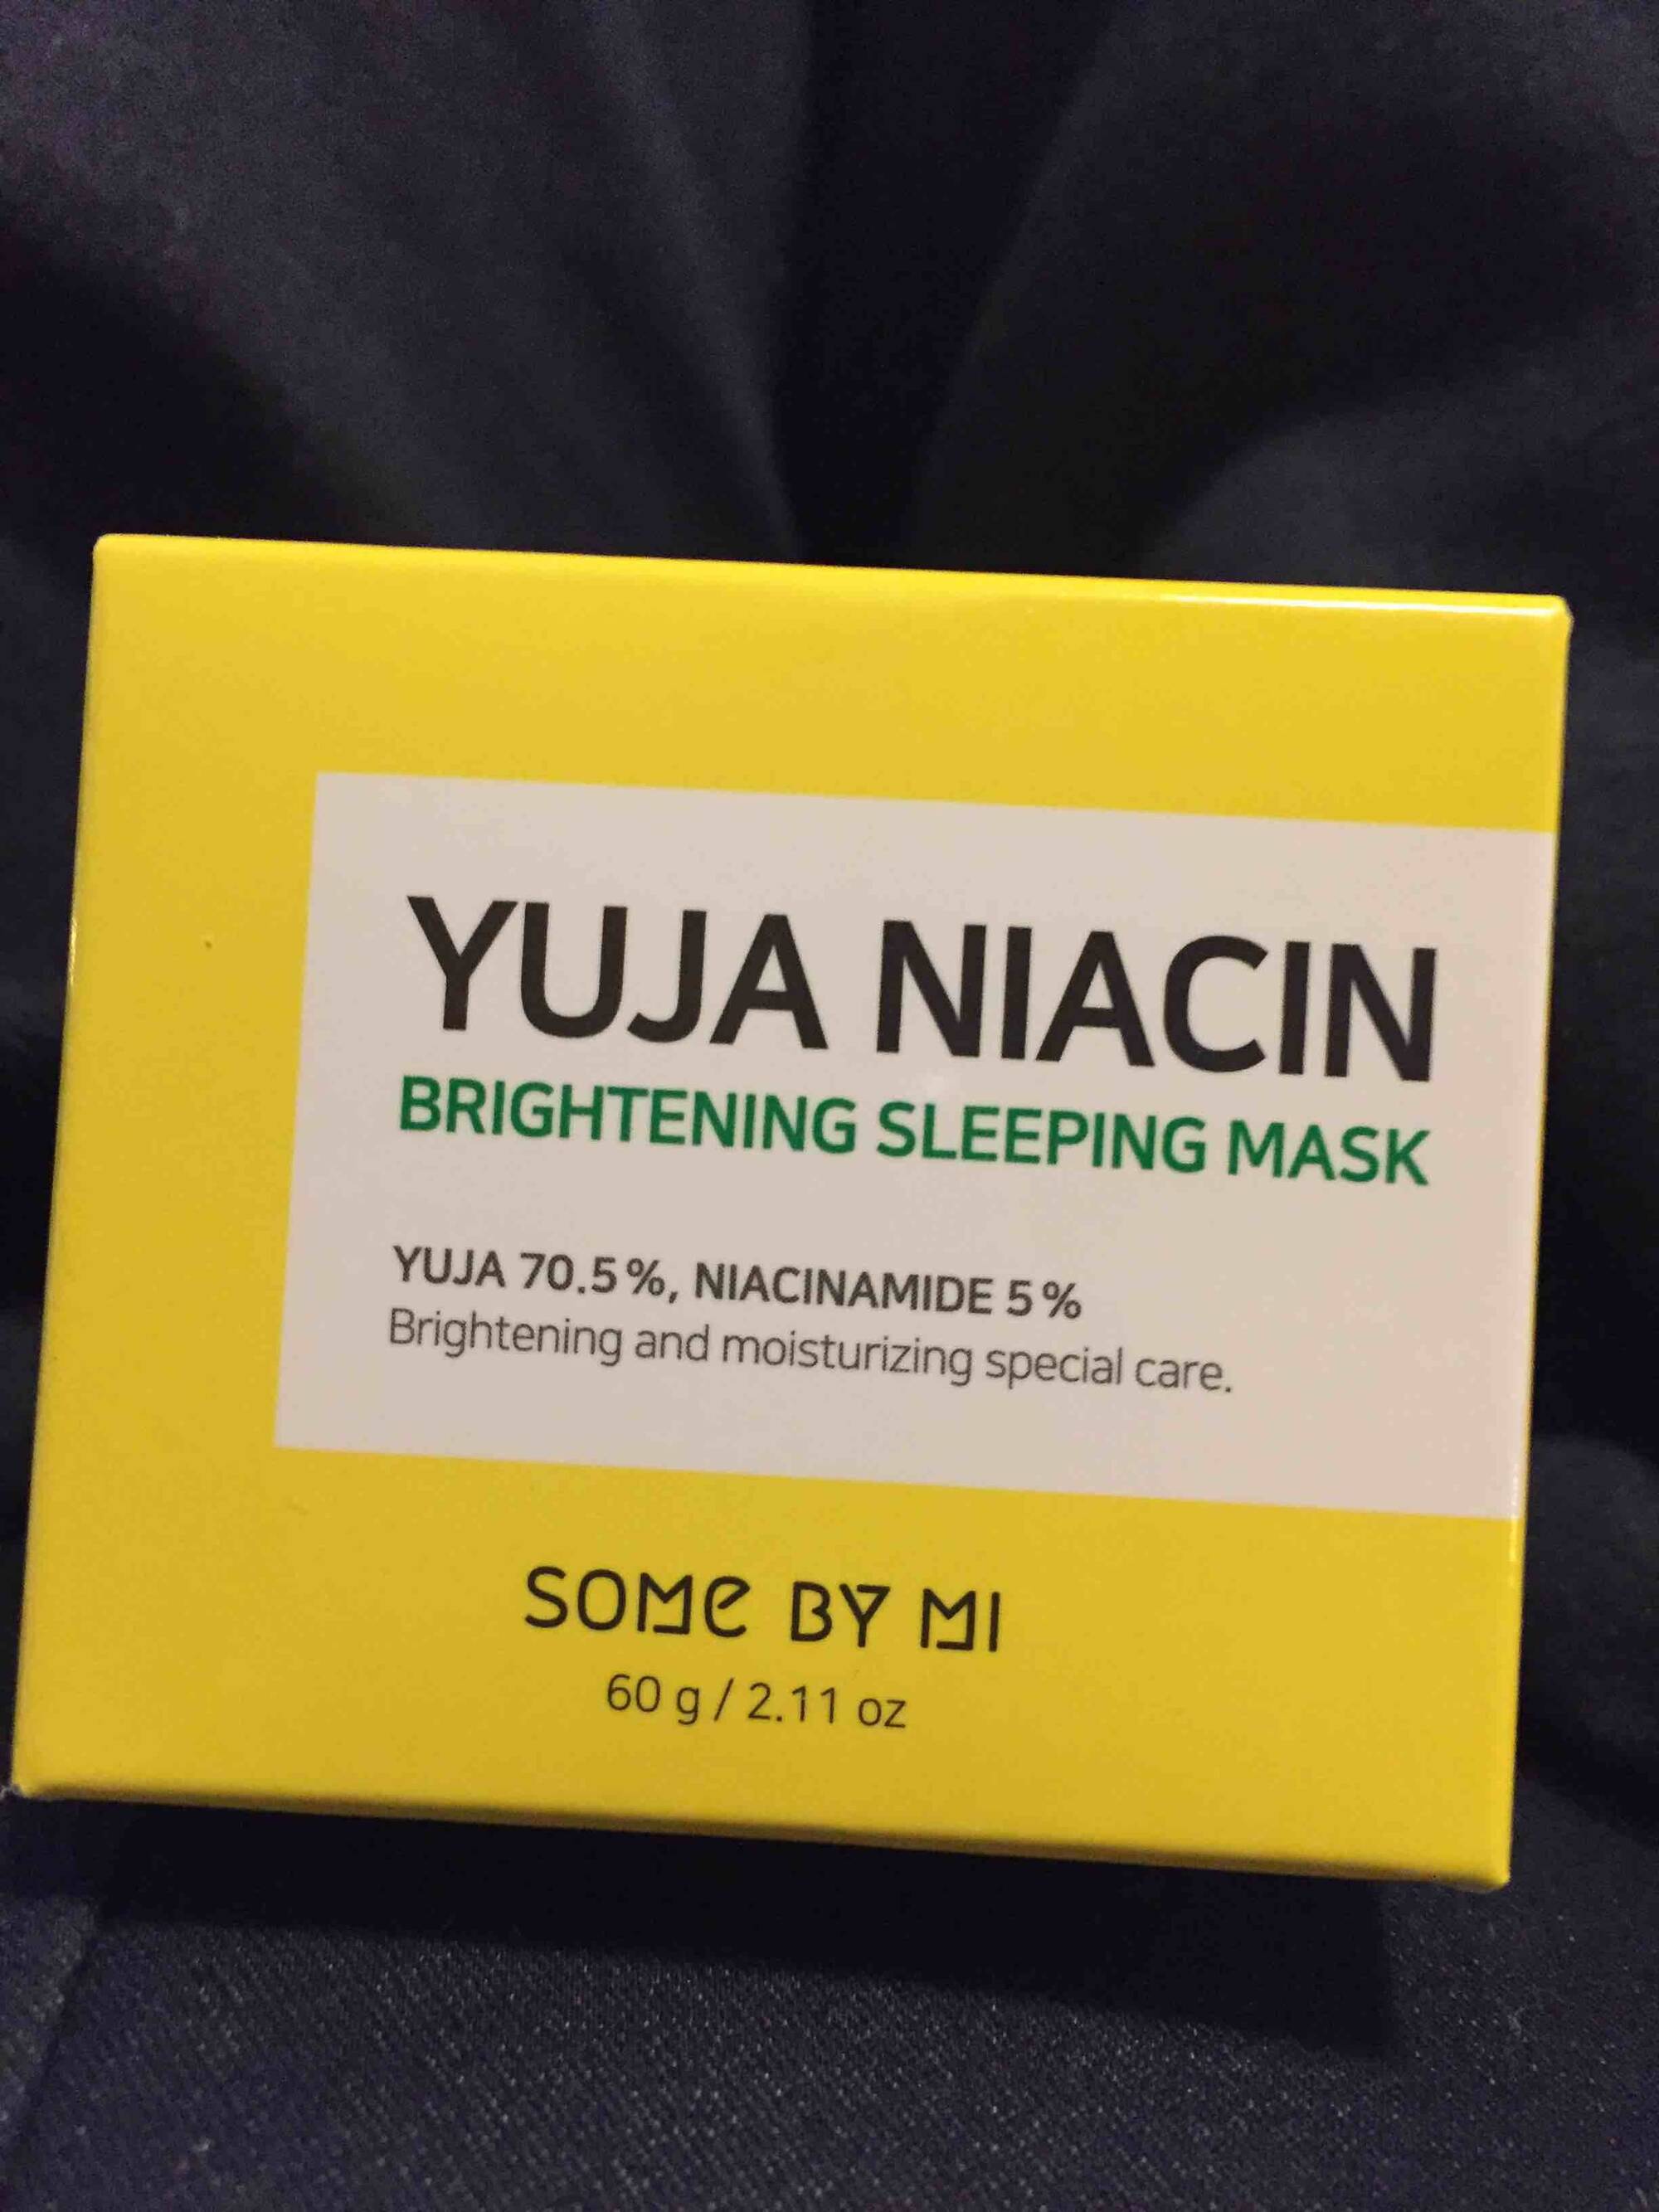 SOME BY MI - Yuja Niacin - Brightening sleeping mask